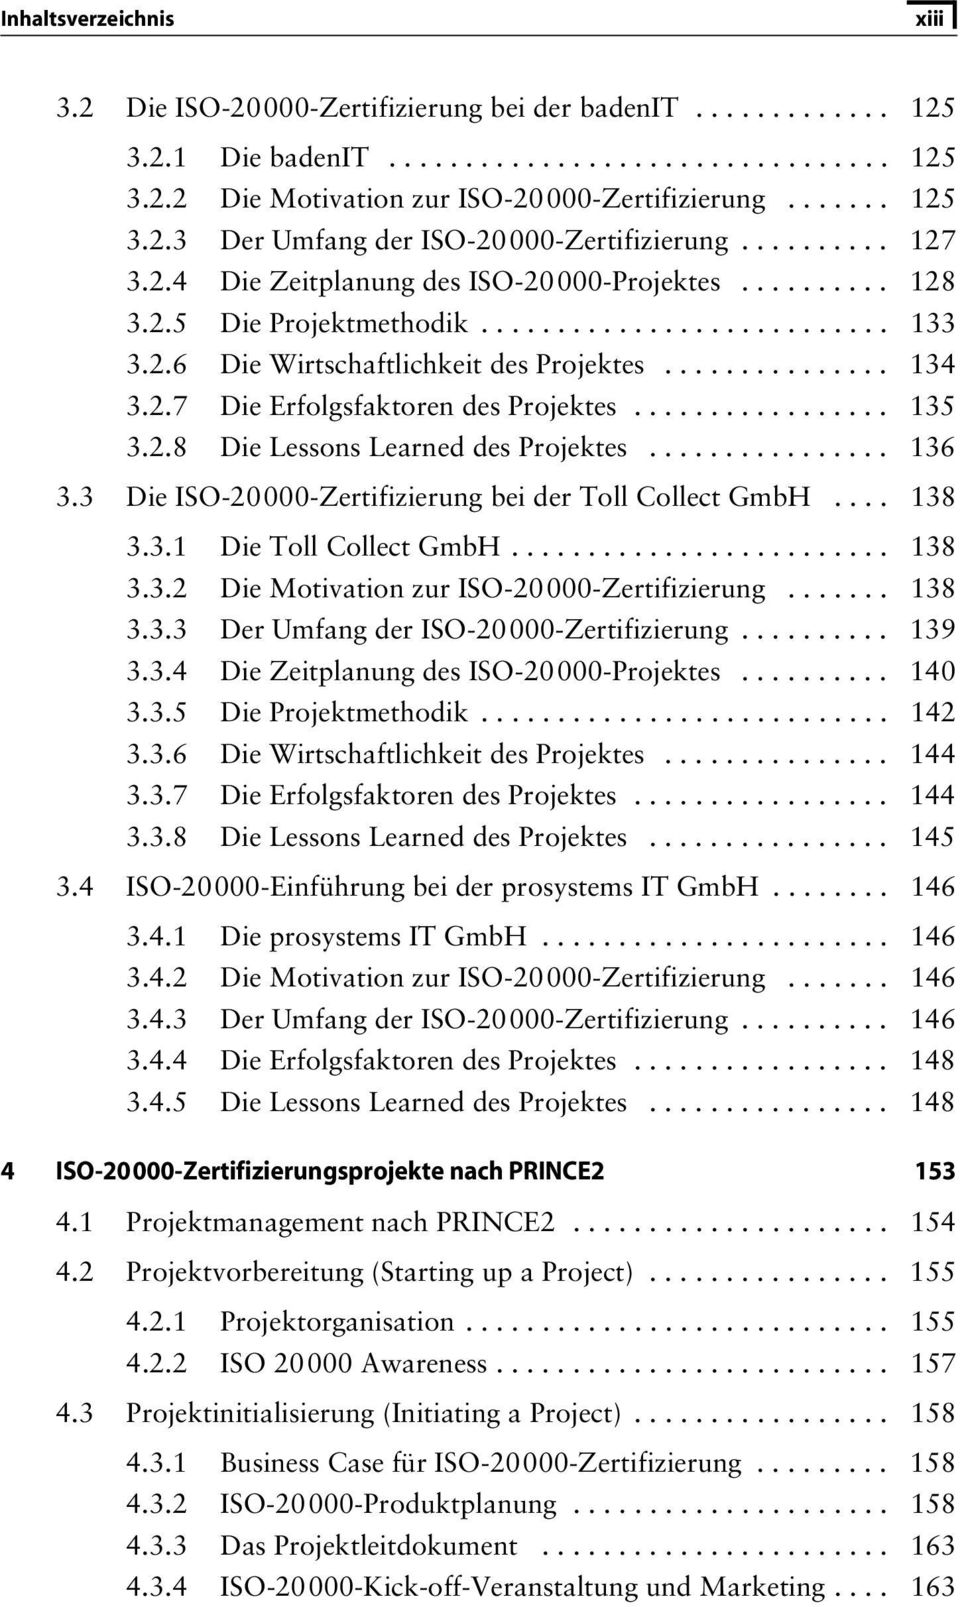 ................ 135 3.2.8 Die Lessons Learned des Projektes................ 136 3.3 Die ISO-20000-Zertifizierung bei der Toll Collect GmbH.... 138 3.3.1 Die Toll Collect GmbH......................... 138 3.3.2 Die Motivation zur ISO-20000-Zertifizierung.